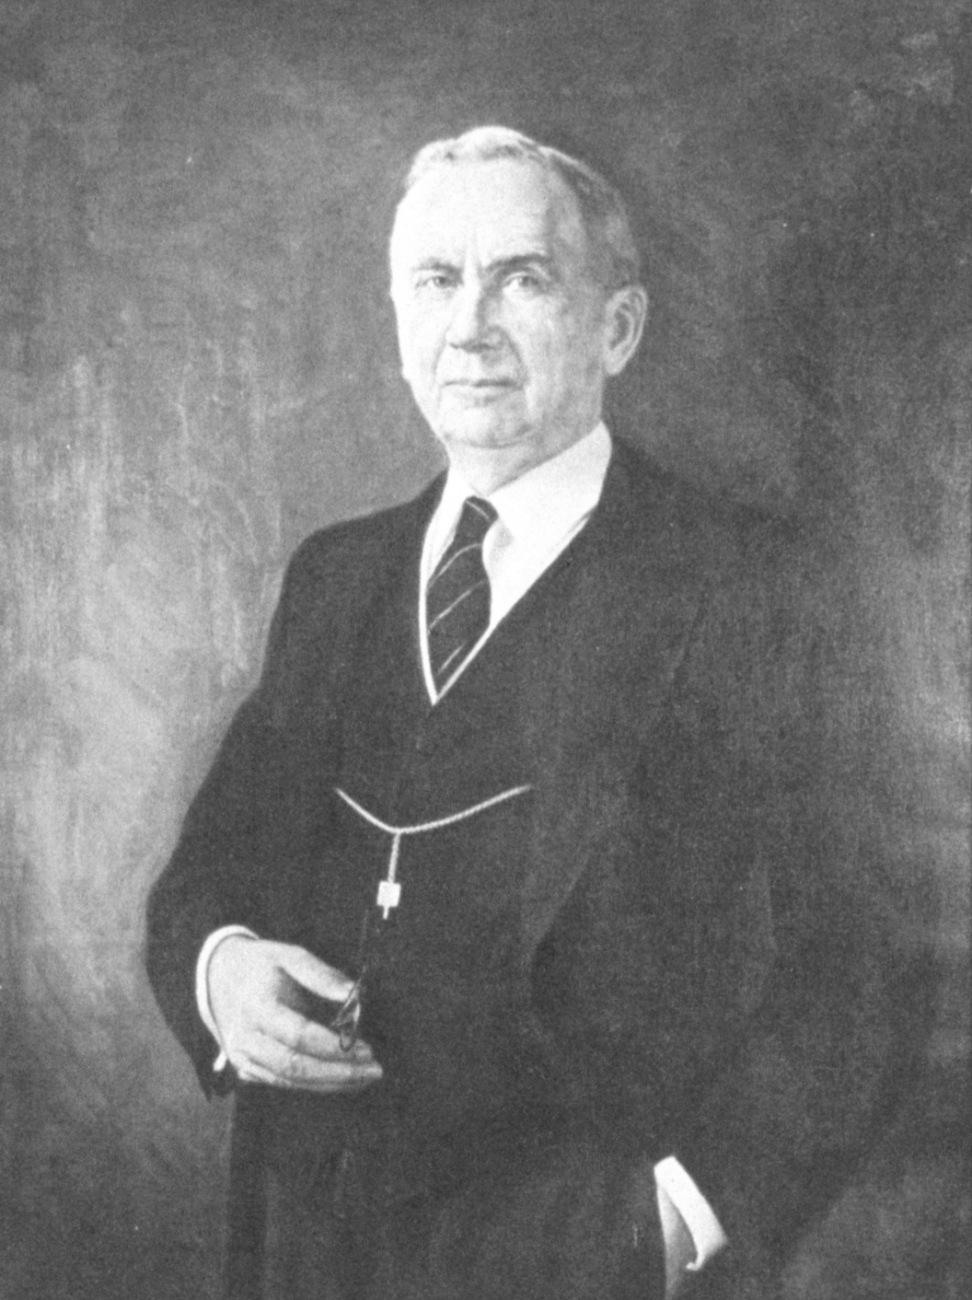 Daniel Calhoun Roper, 1867 - , seventh Secretary of Commerce